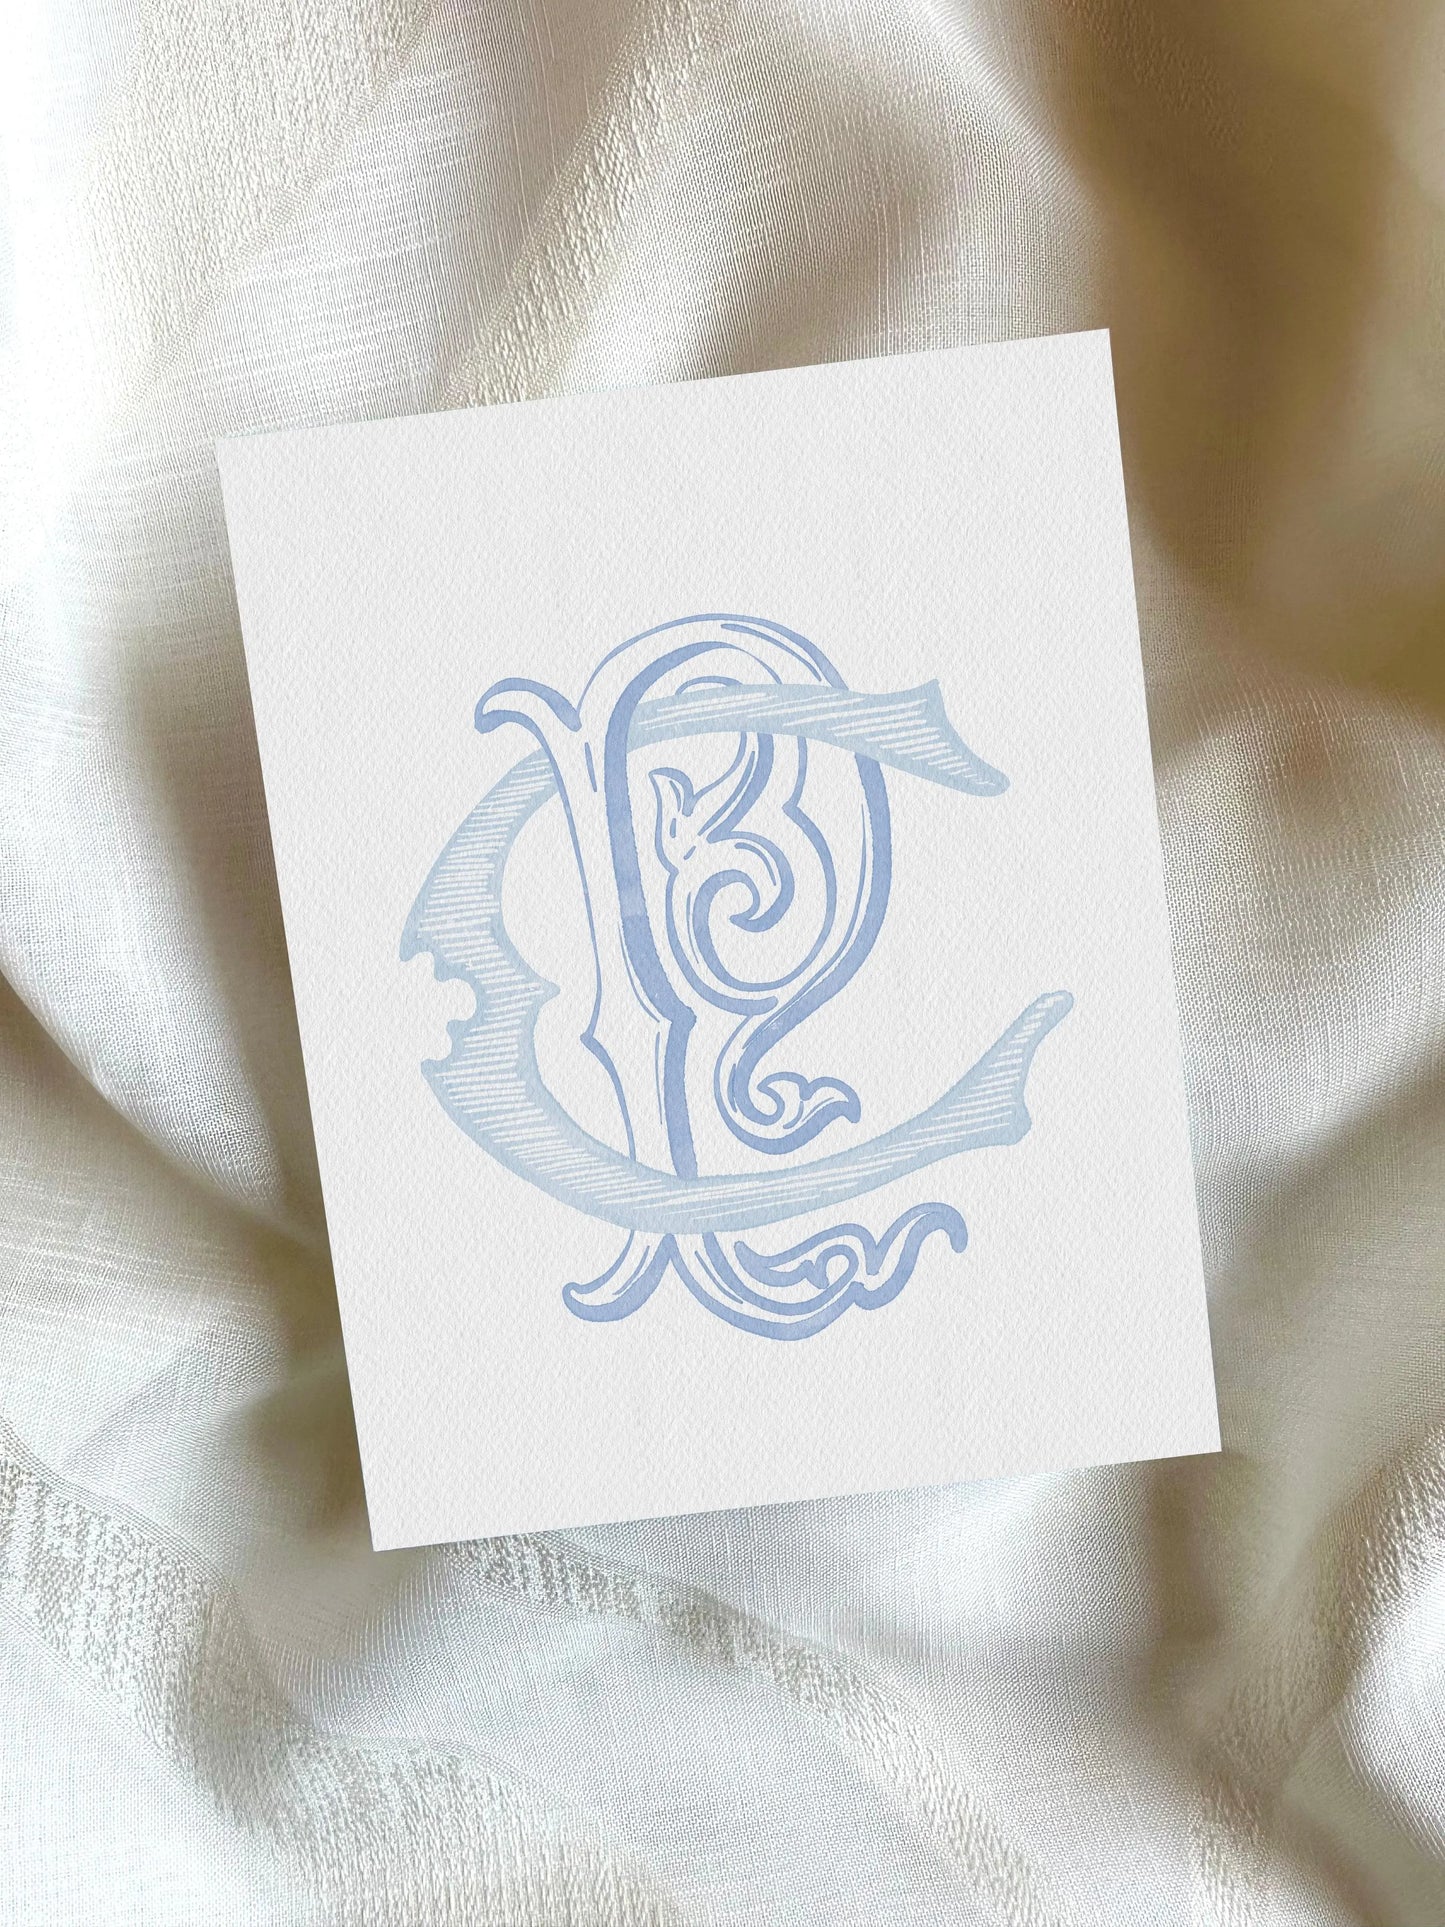 2 Letter Monogram with Letters CP | Digital Download - Wedding Monogram SVG, Personal Logo, Wedding Logo for Wedding Invitations The Wedding Crest Lab